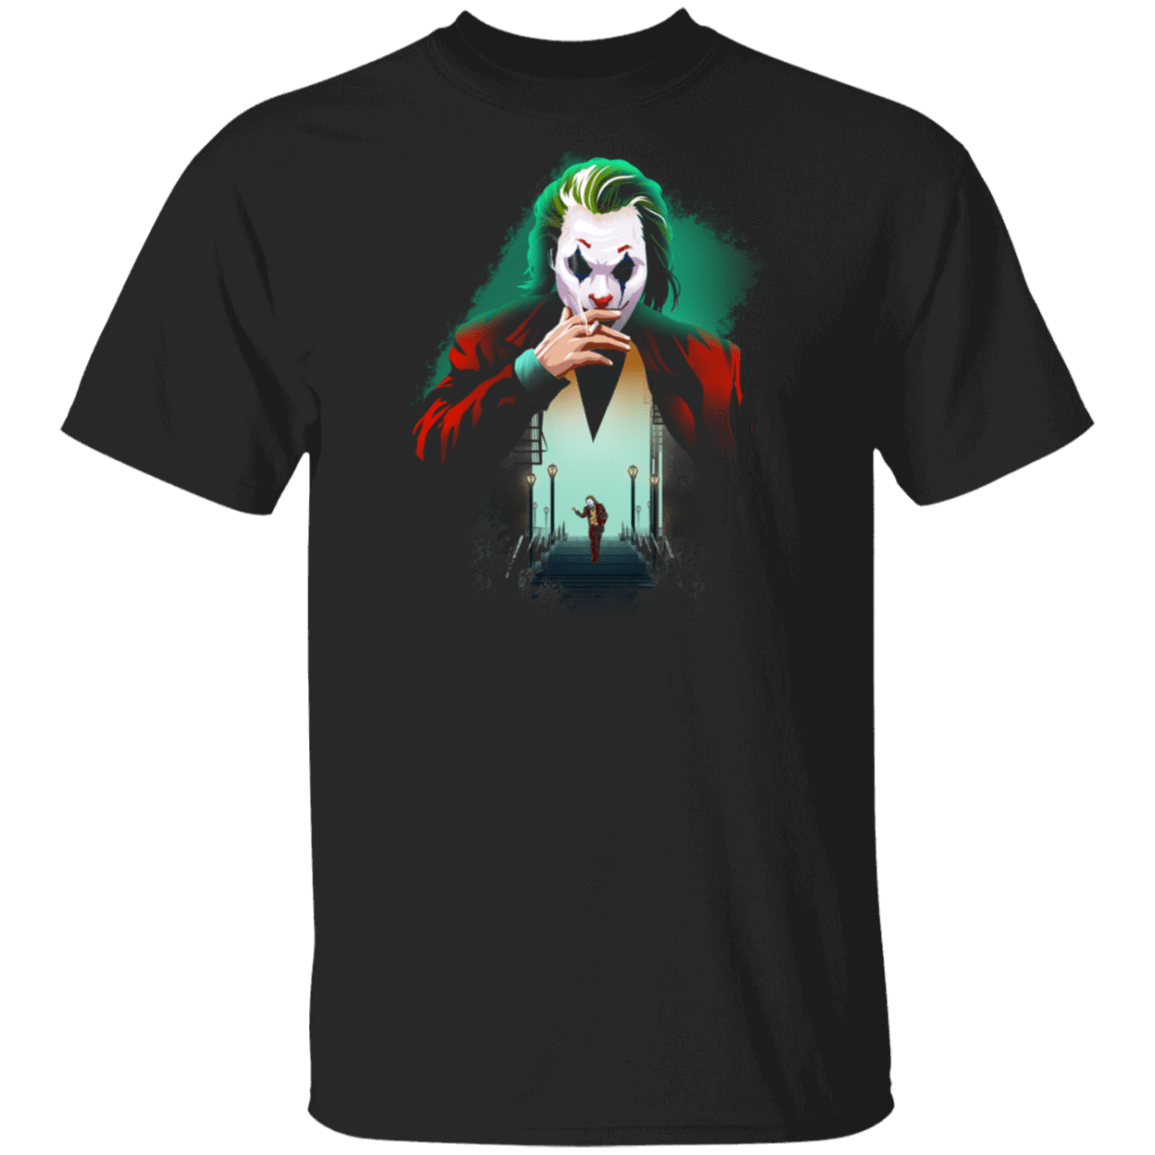 T-Shirts Black / S The Joker T-Shirt